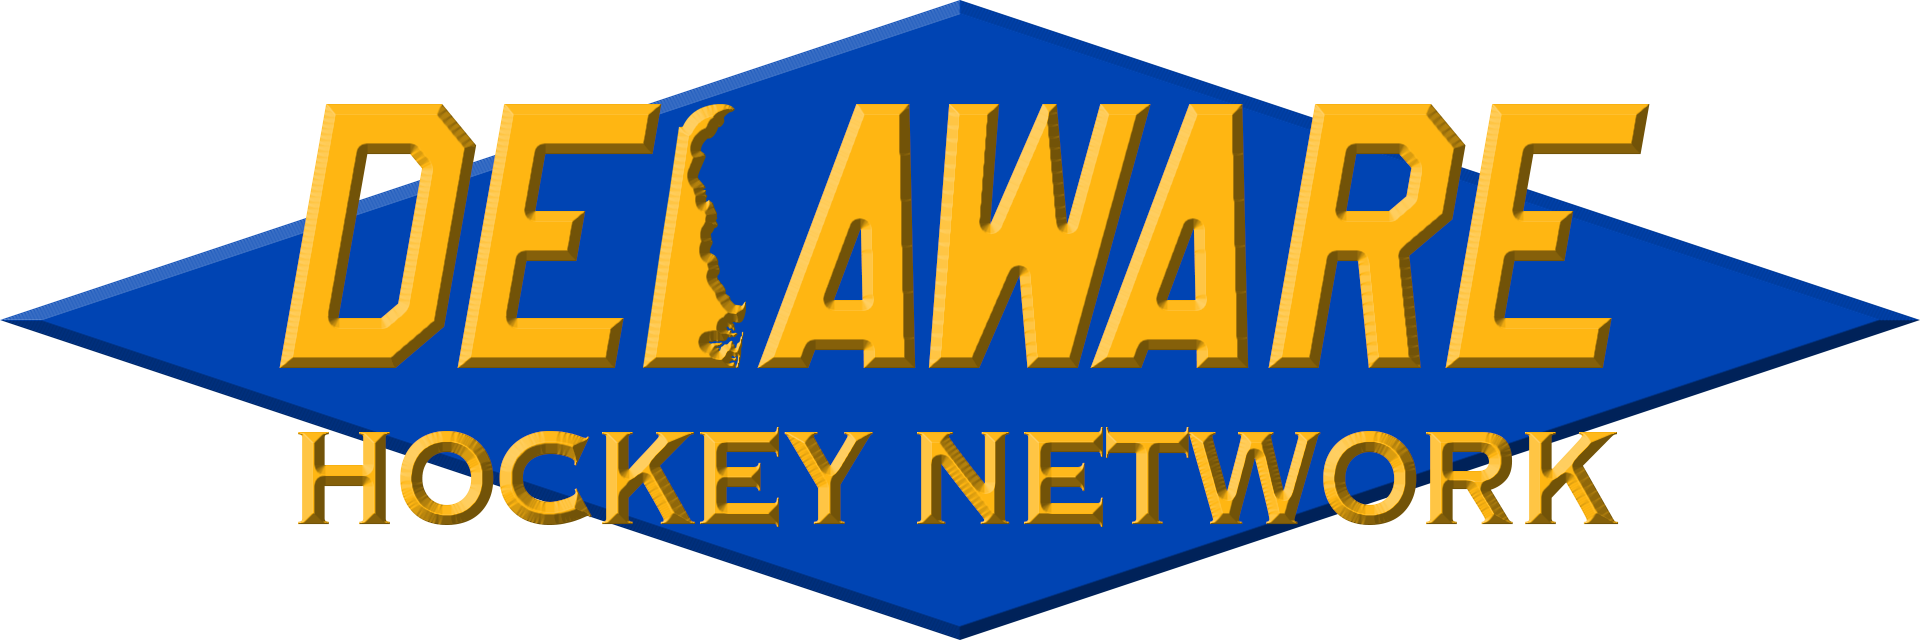 Delaware Hockey Network